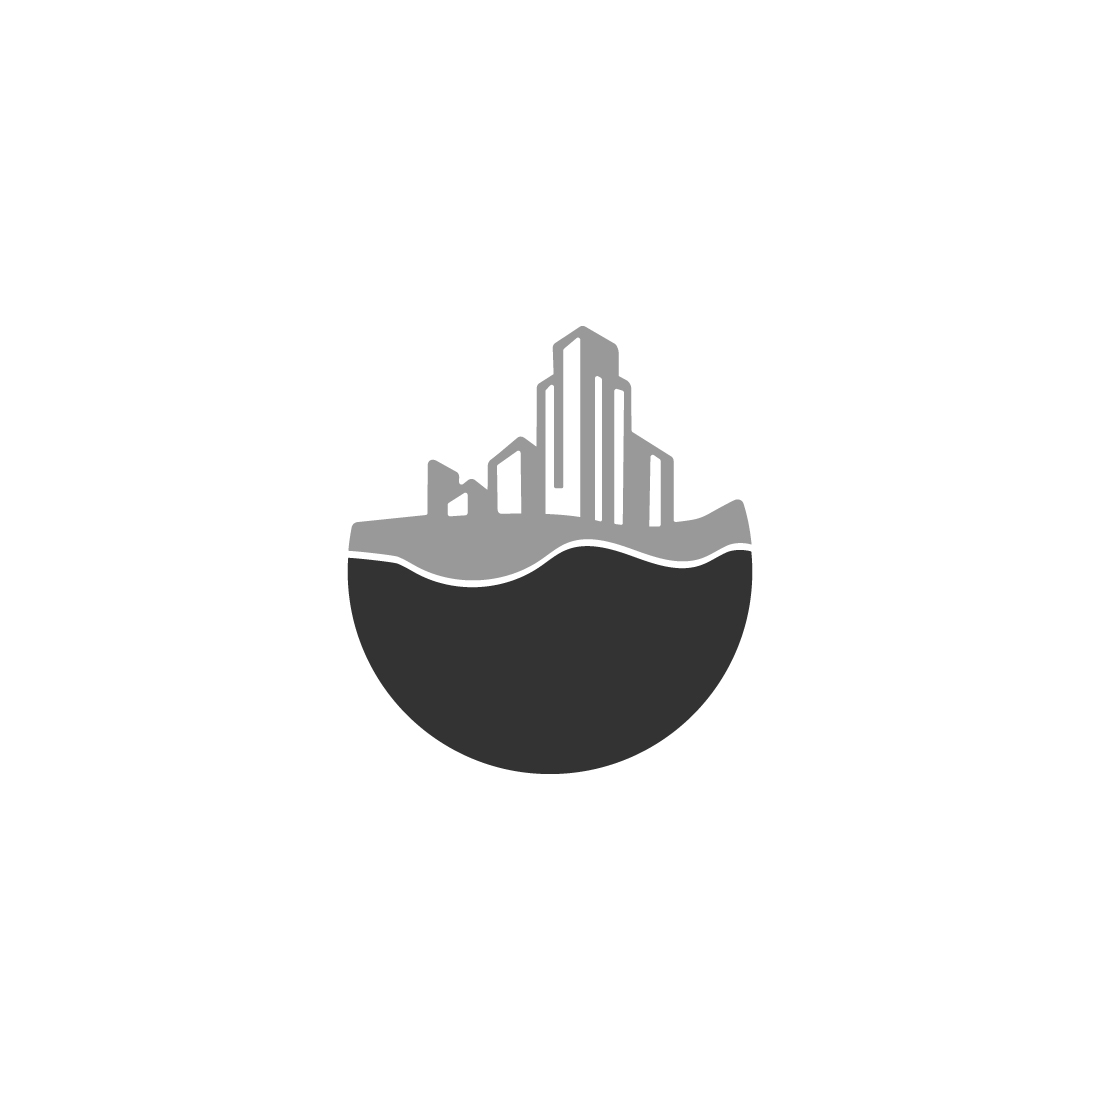 Ocean Town Logo Design Template cover image.